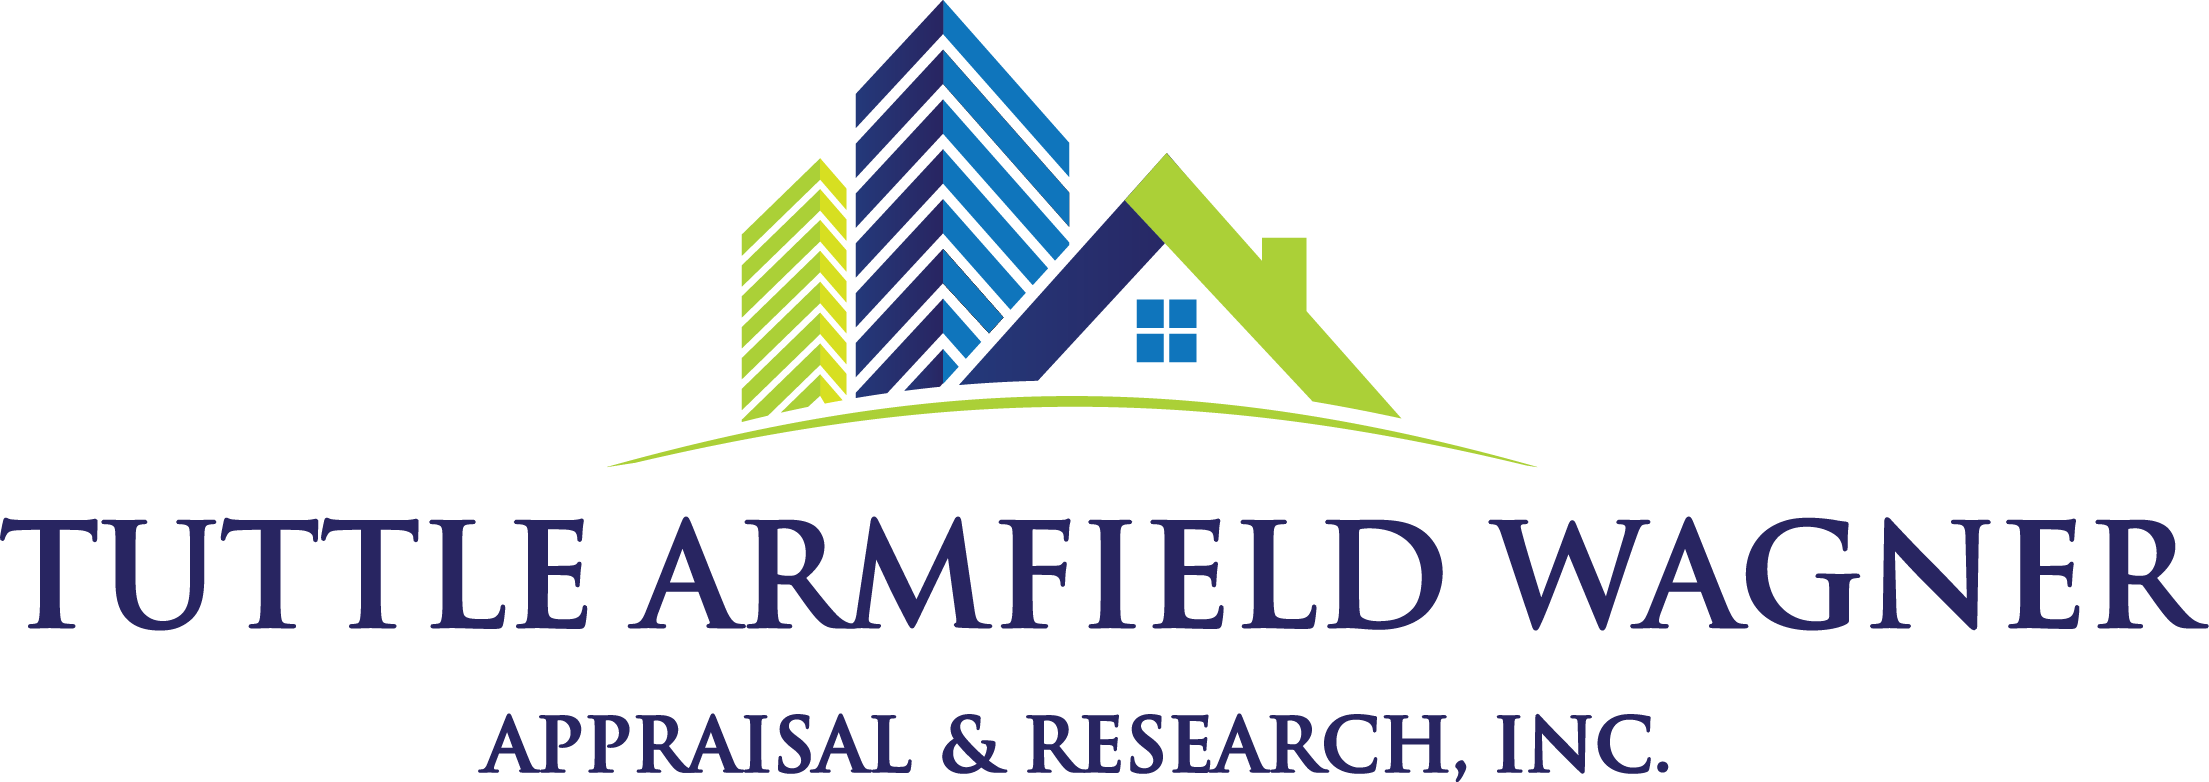 Tuttle-Armfield-Wagner Appraisal & Research, Inc. logo